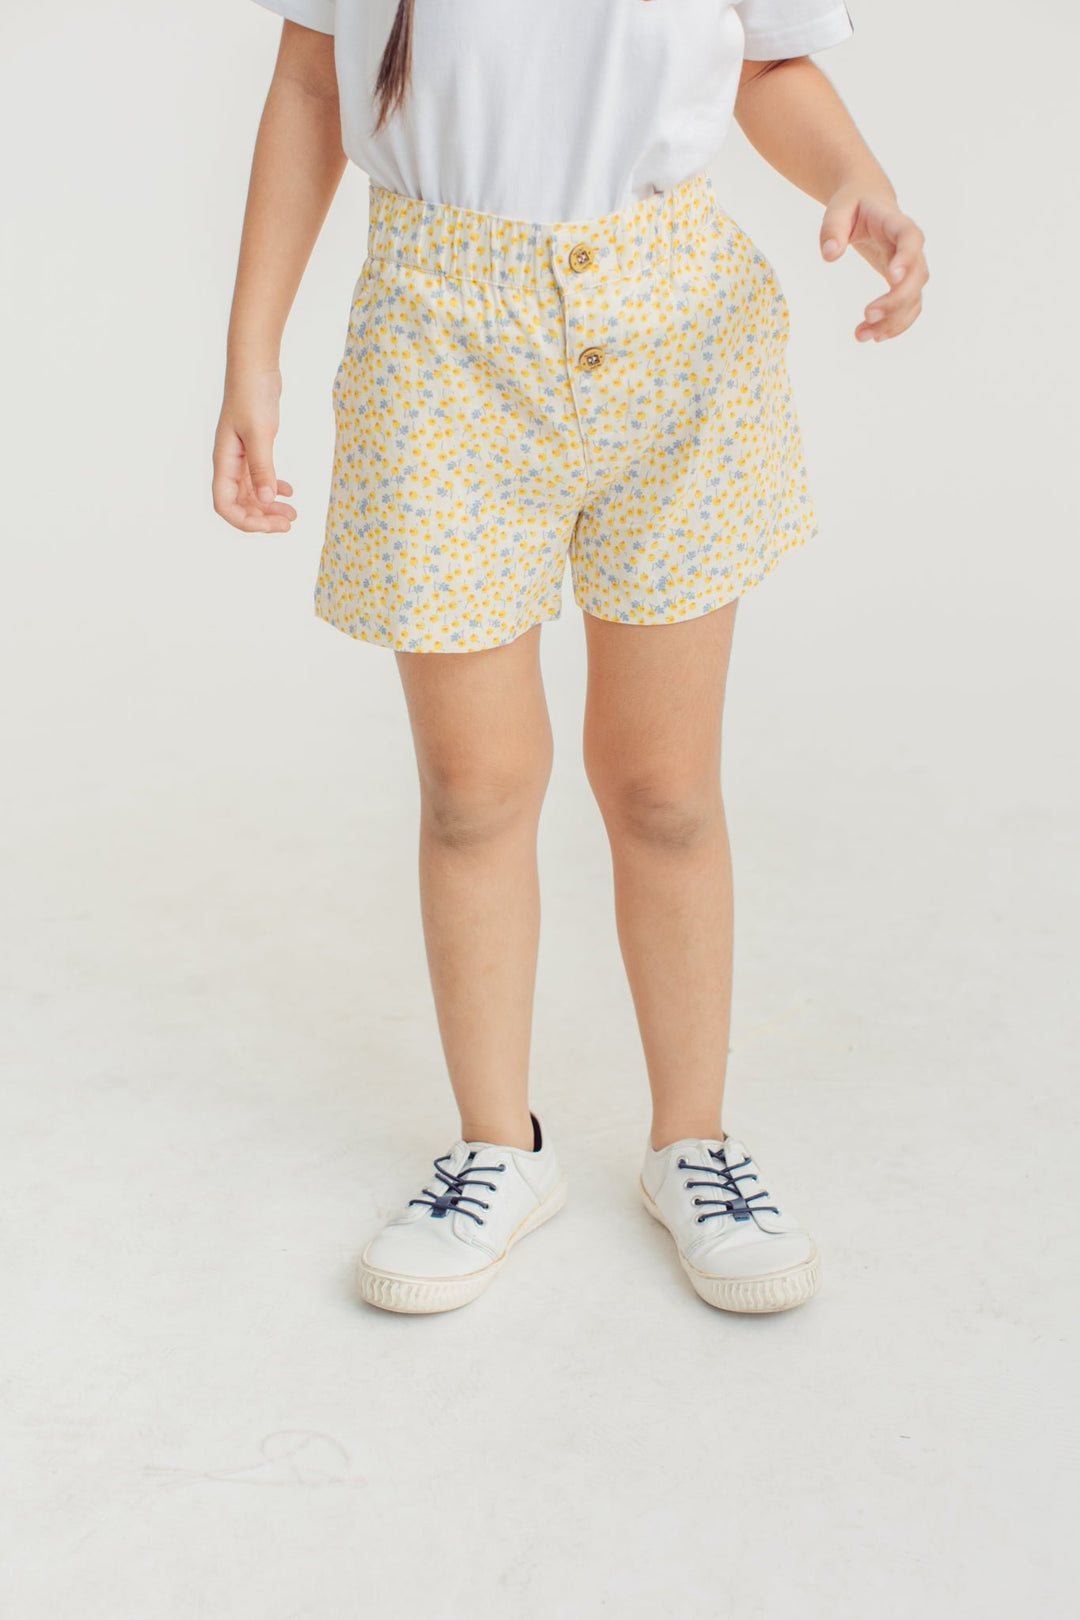 Yellow Printed Pull on Shorts Kids Girls - Mossimo PH